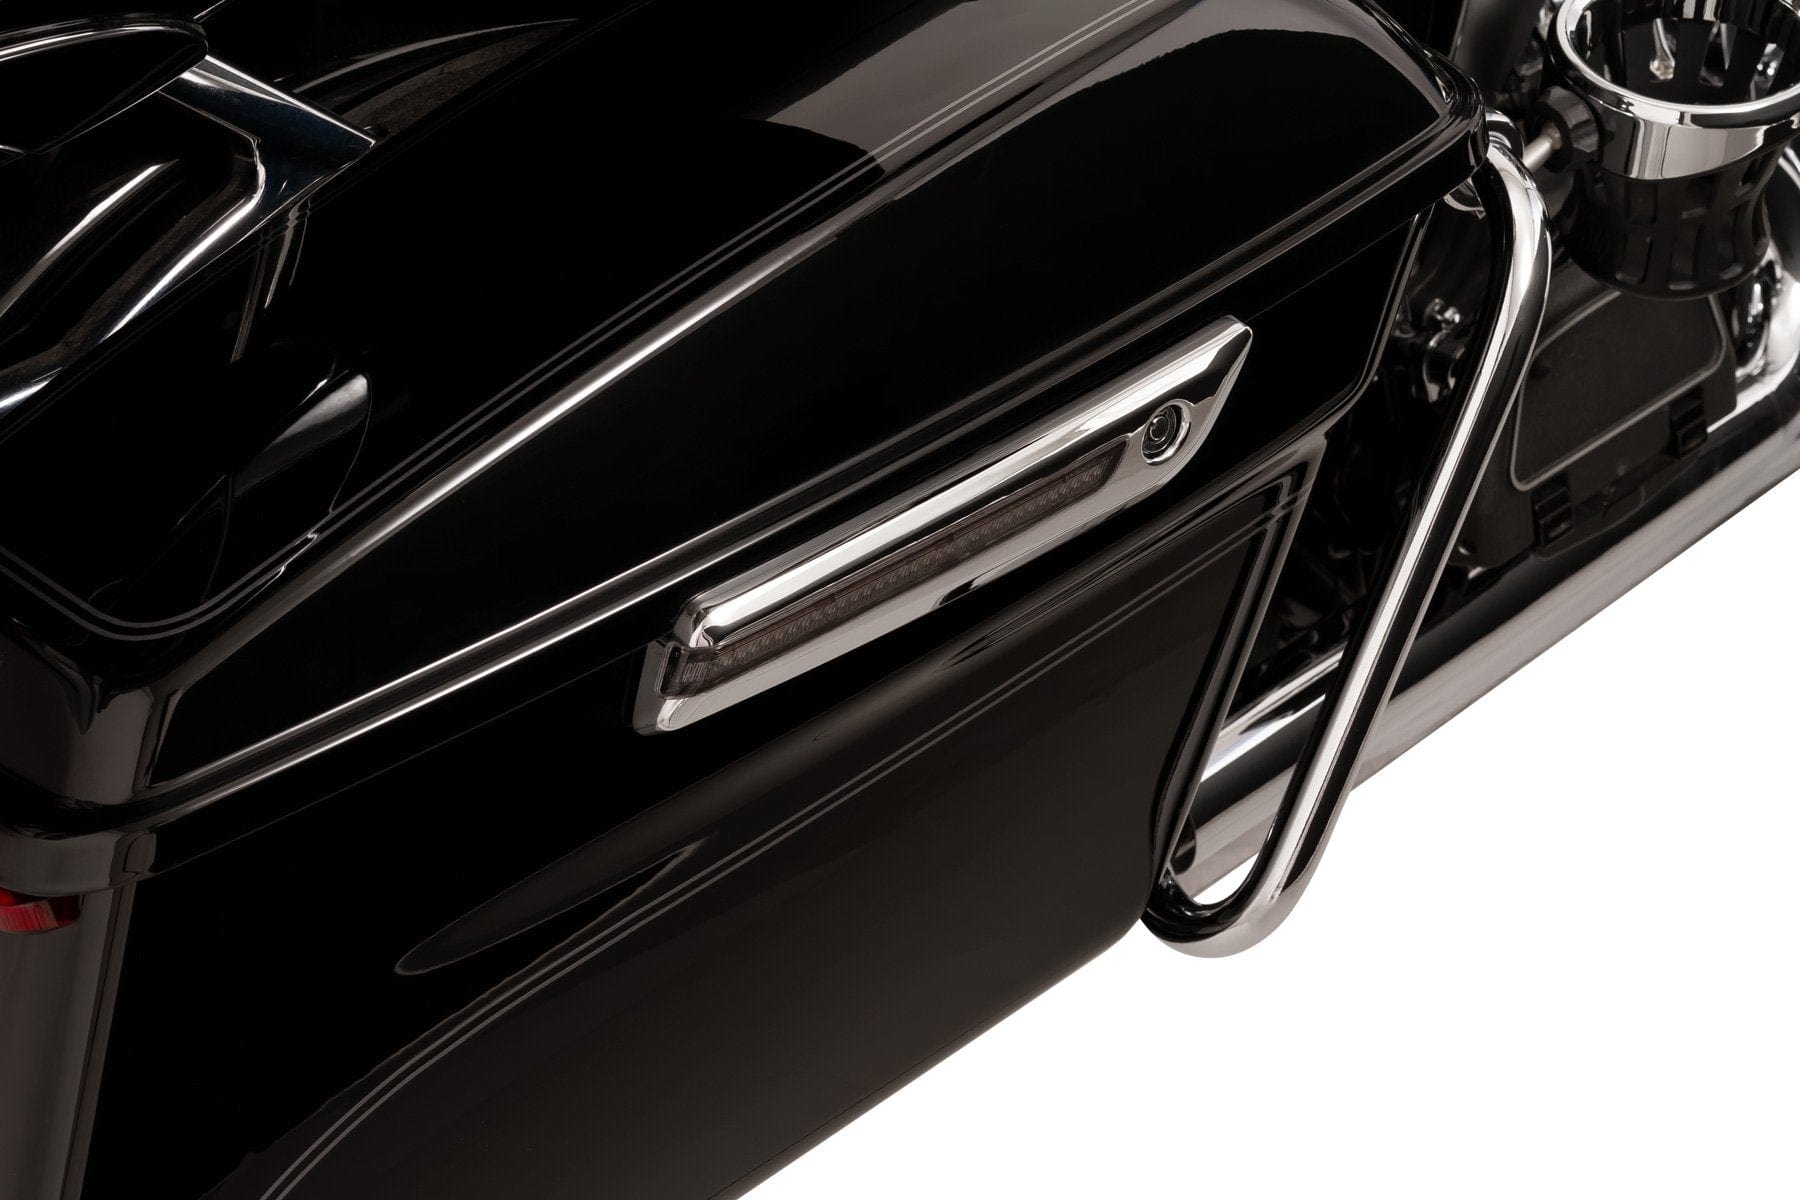 Ciro3D Brake & Tail Lights LED Lit Saddlebag Hinge Covers - Smoke Lenses